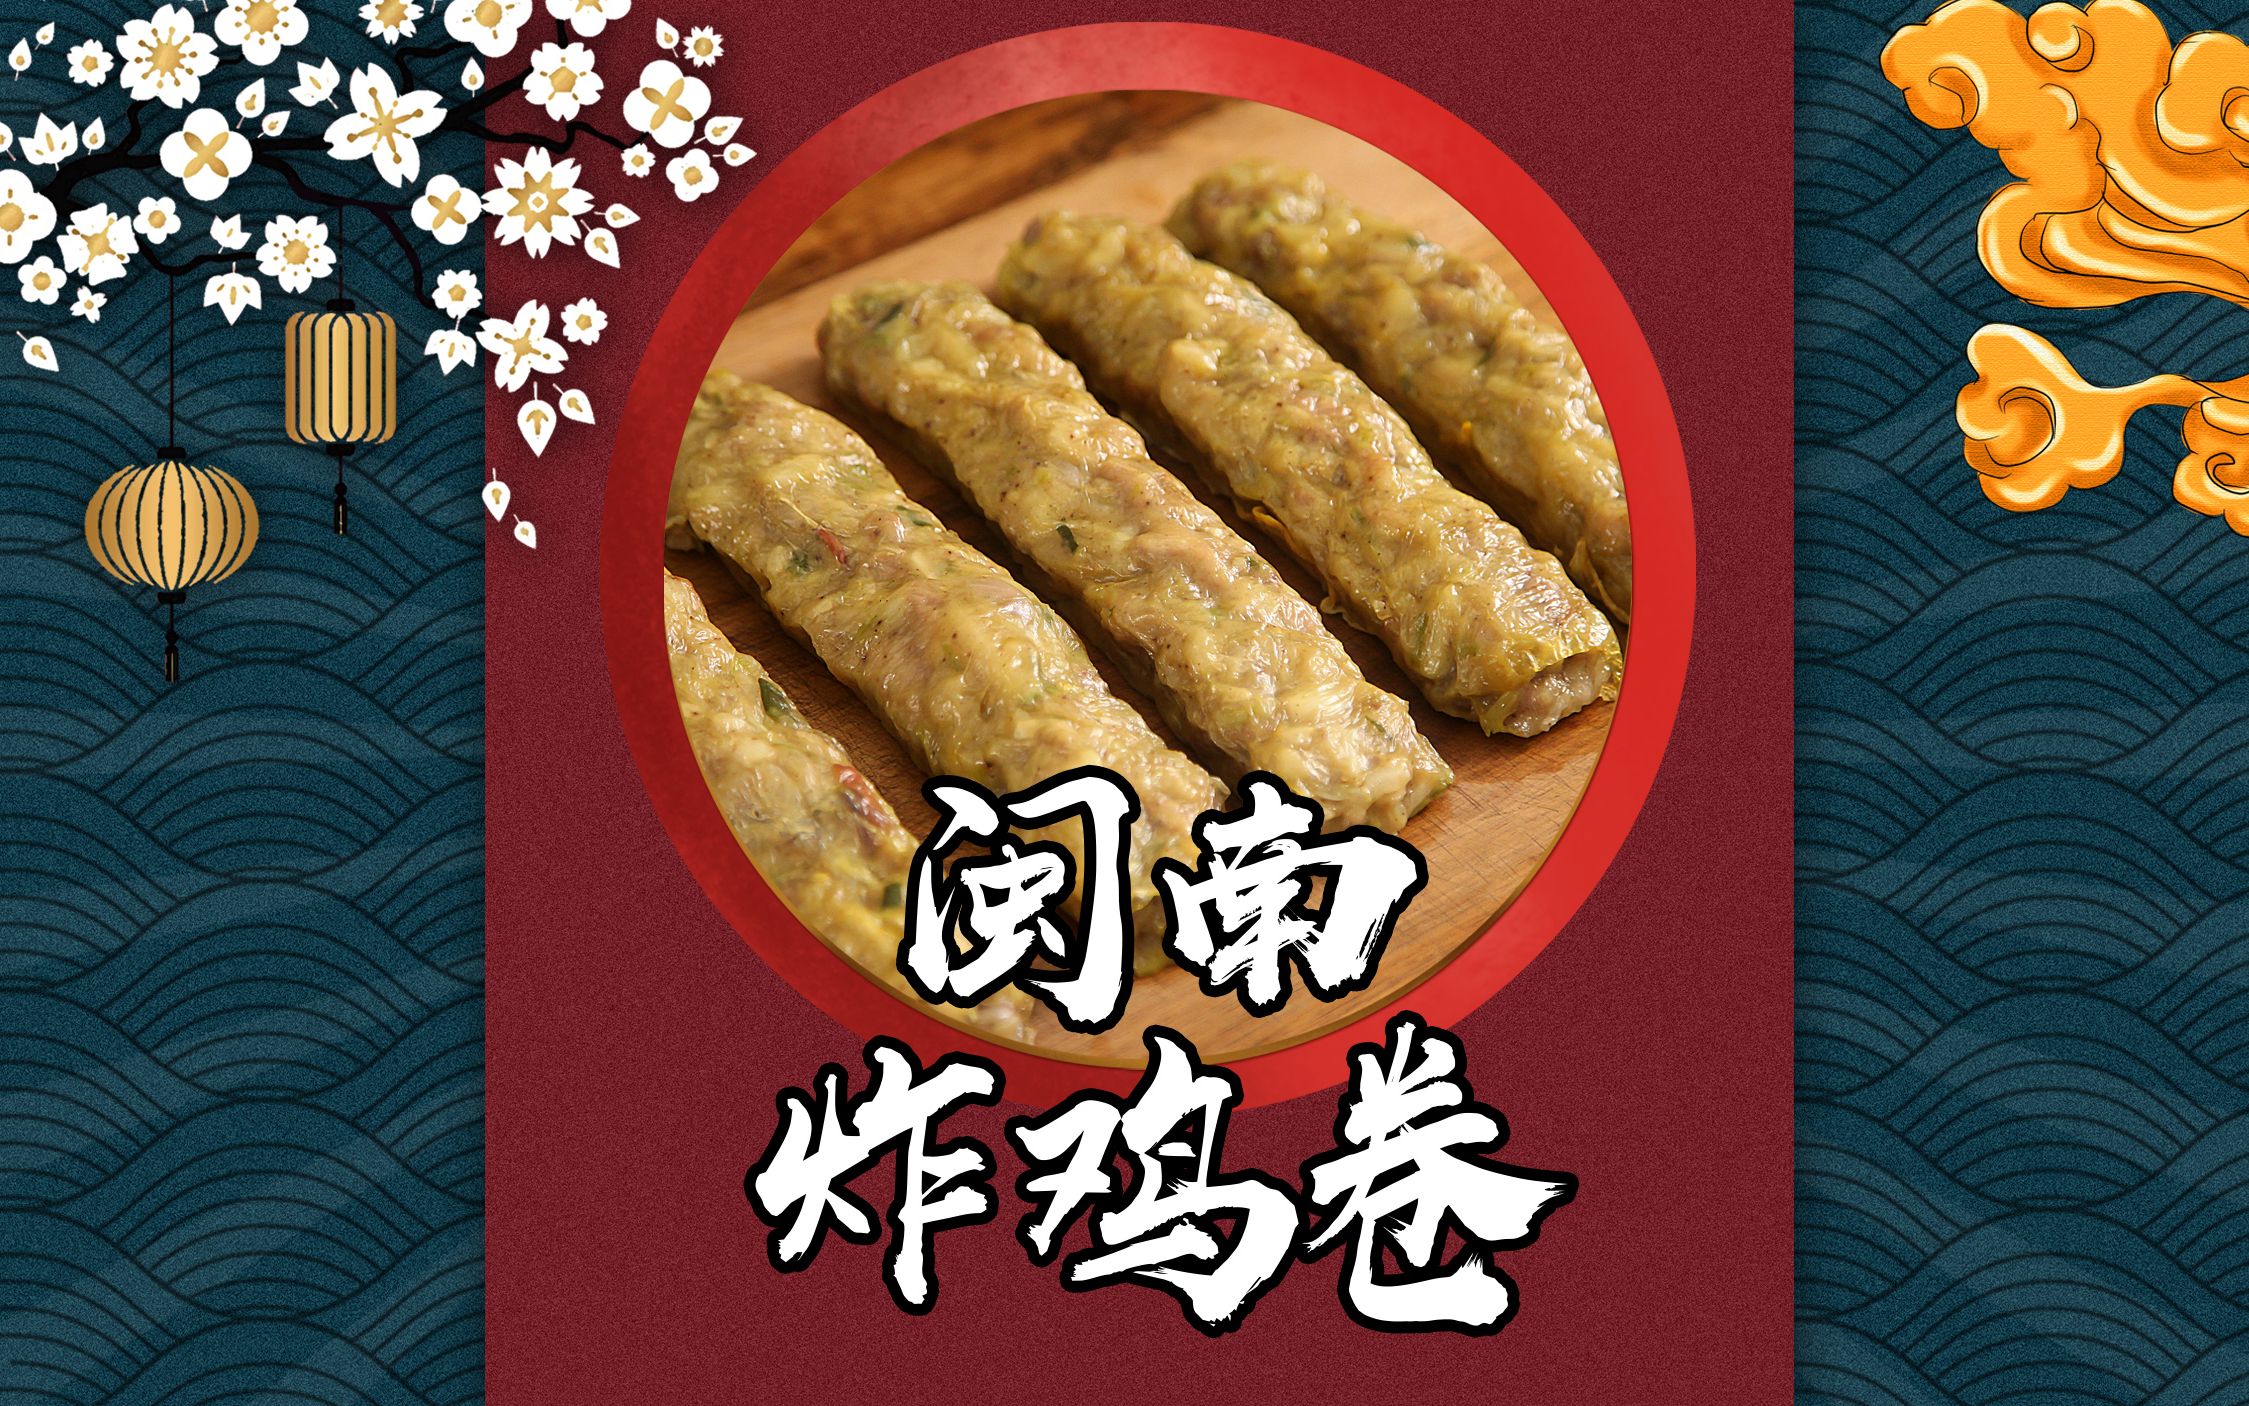 醉鸡卷 Drunken Chicken Roll - Nanyang Kitchen 南洋小厨